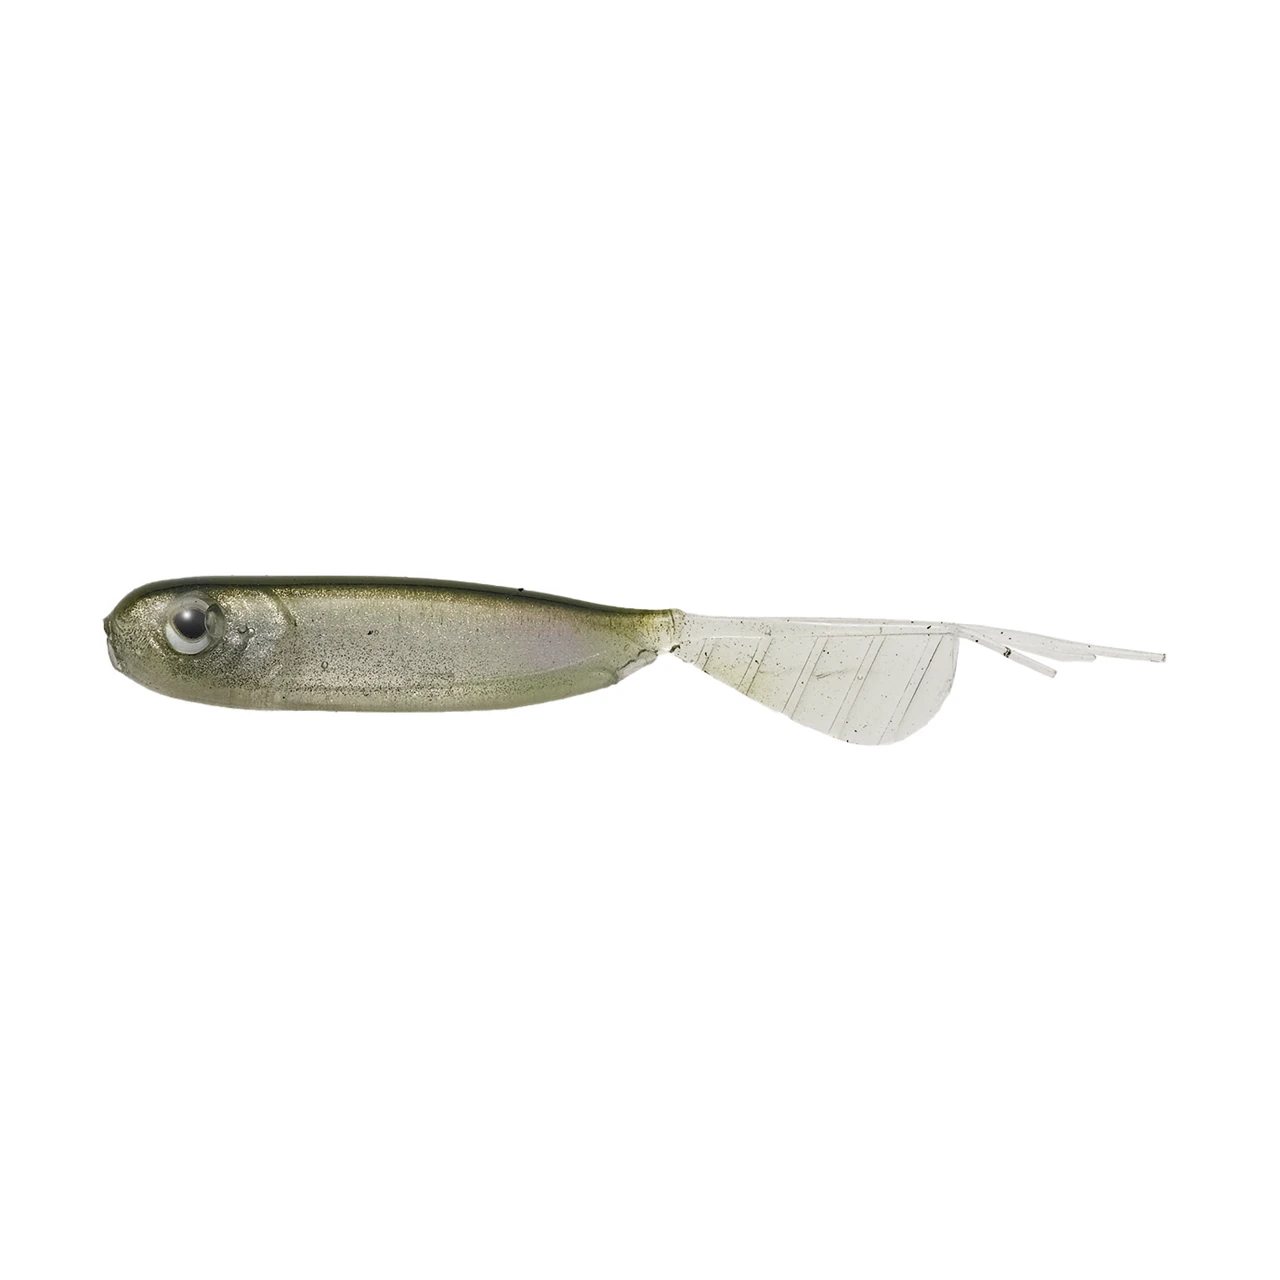 Tiemco PDL Super Hovering Fish 2.5 - Bait Finesse Empire